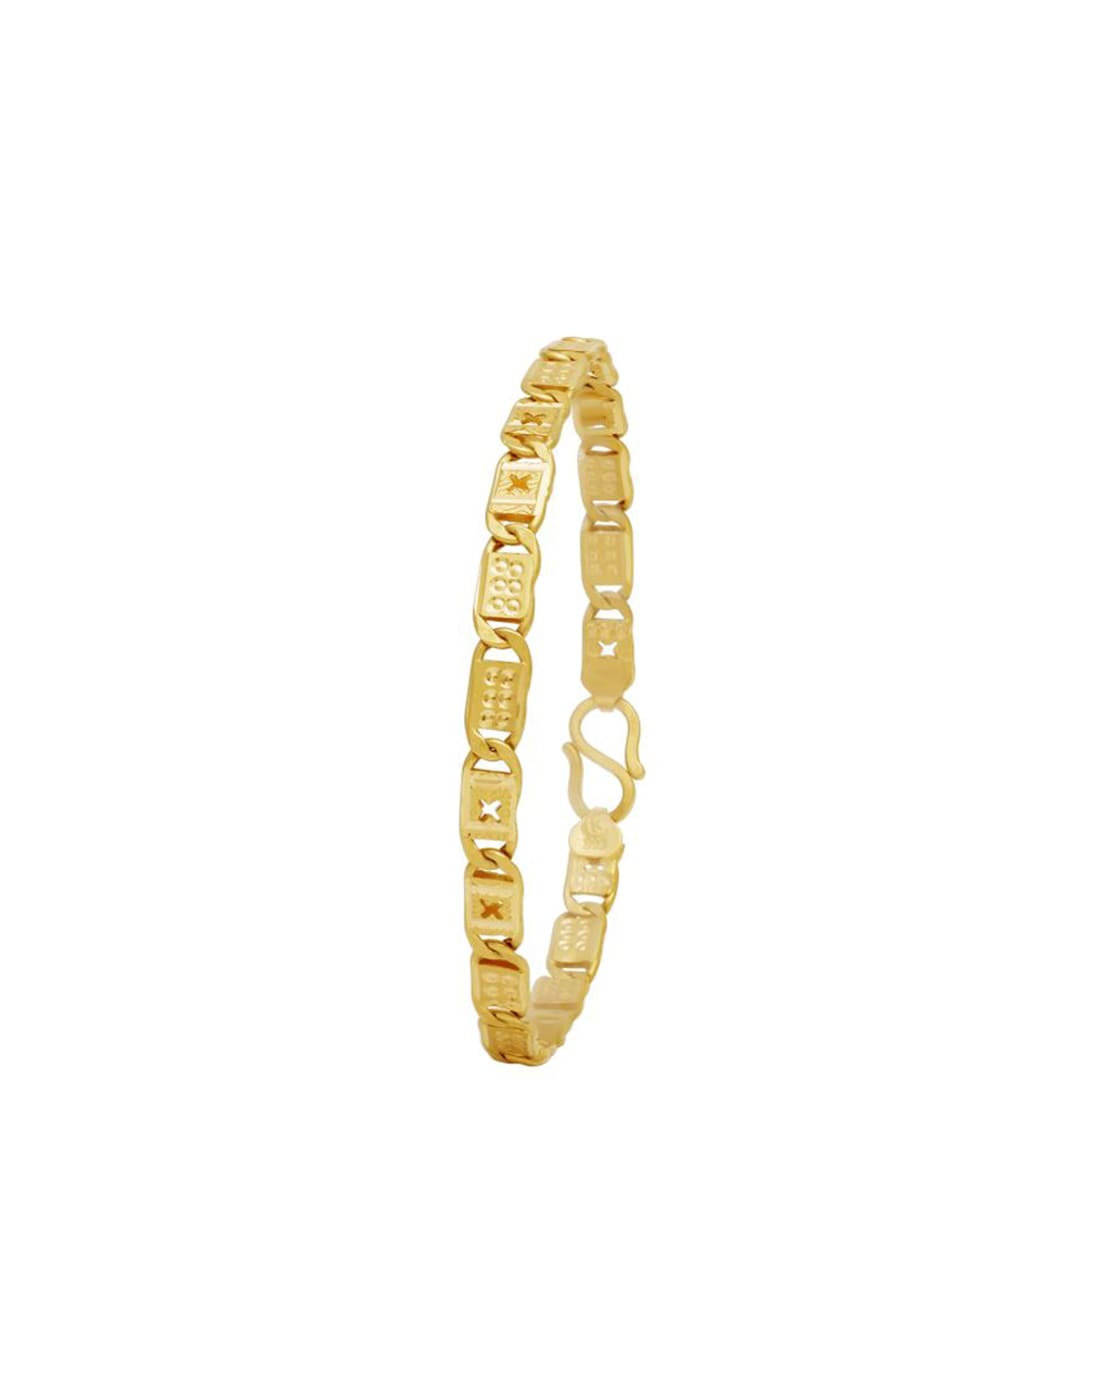 1 Gram Gold Forming Exciting Design HighQuality Bracelet for Men  St   Soni Fashion